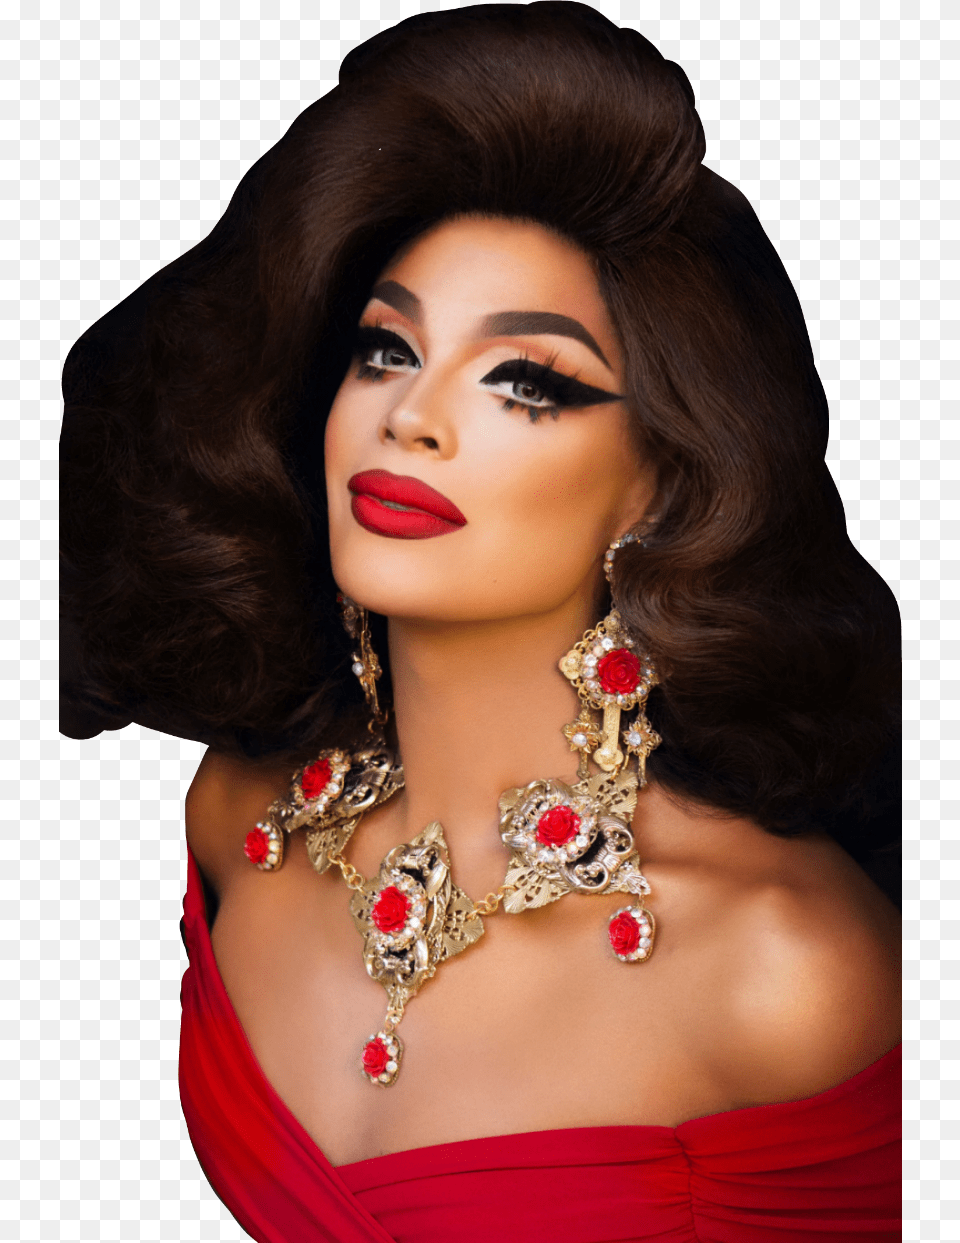 Valentina Rpdr9 Dragqueen Beautiful Valentina Latina Drag Queen, Accessories, Formal Wear, Evening Dress, Dress Png